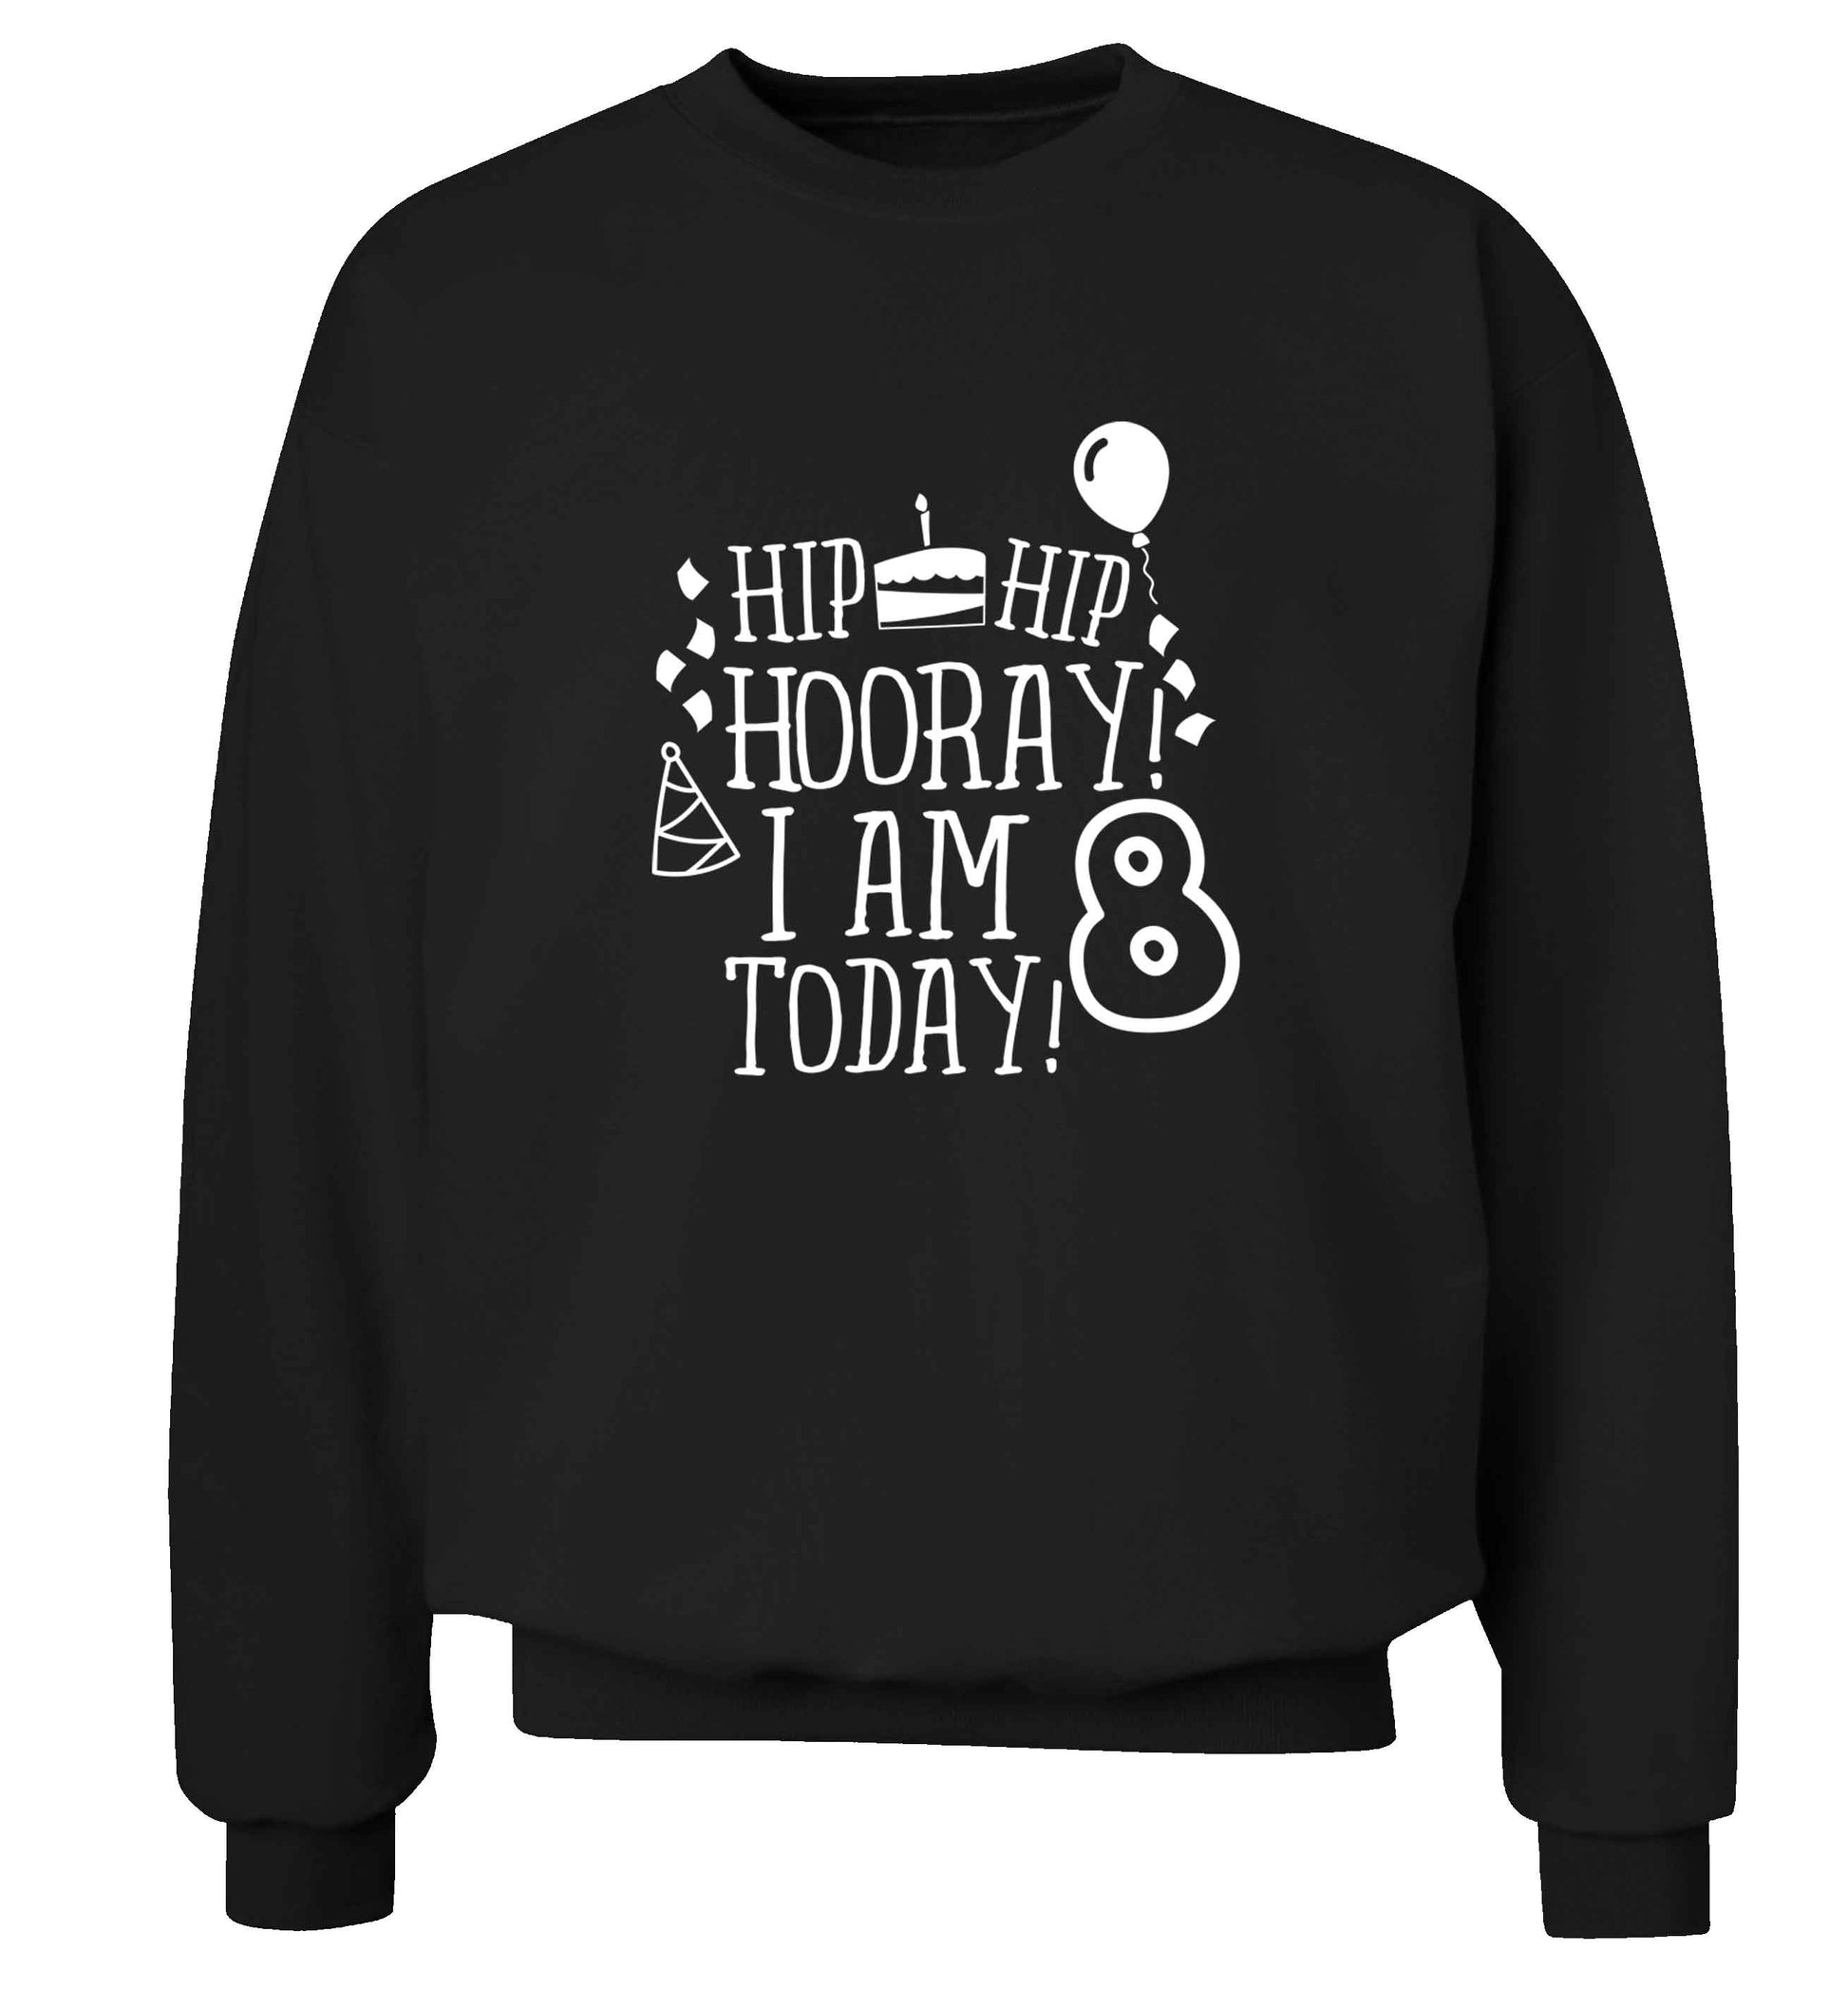 Hip hip hooray I am 8 today! adult's unisex black sweater 2XL